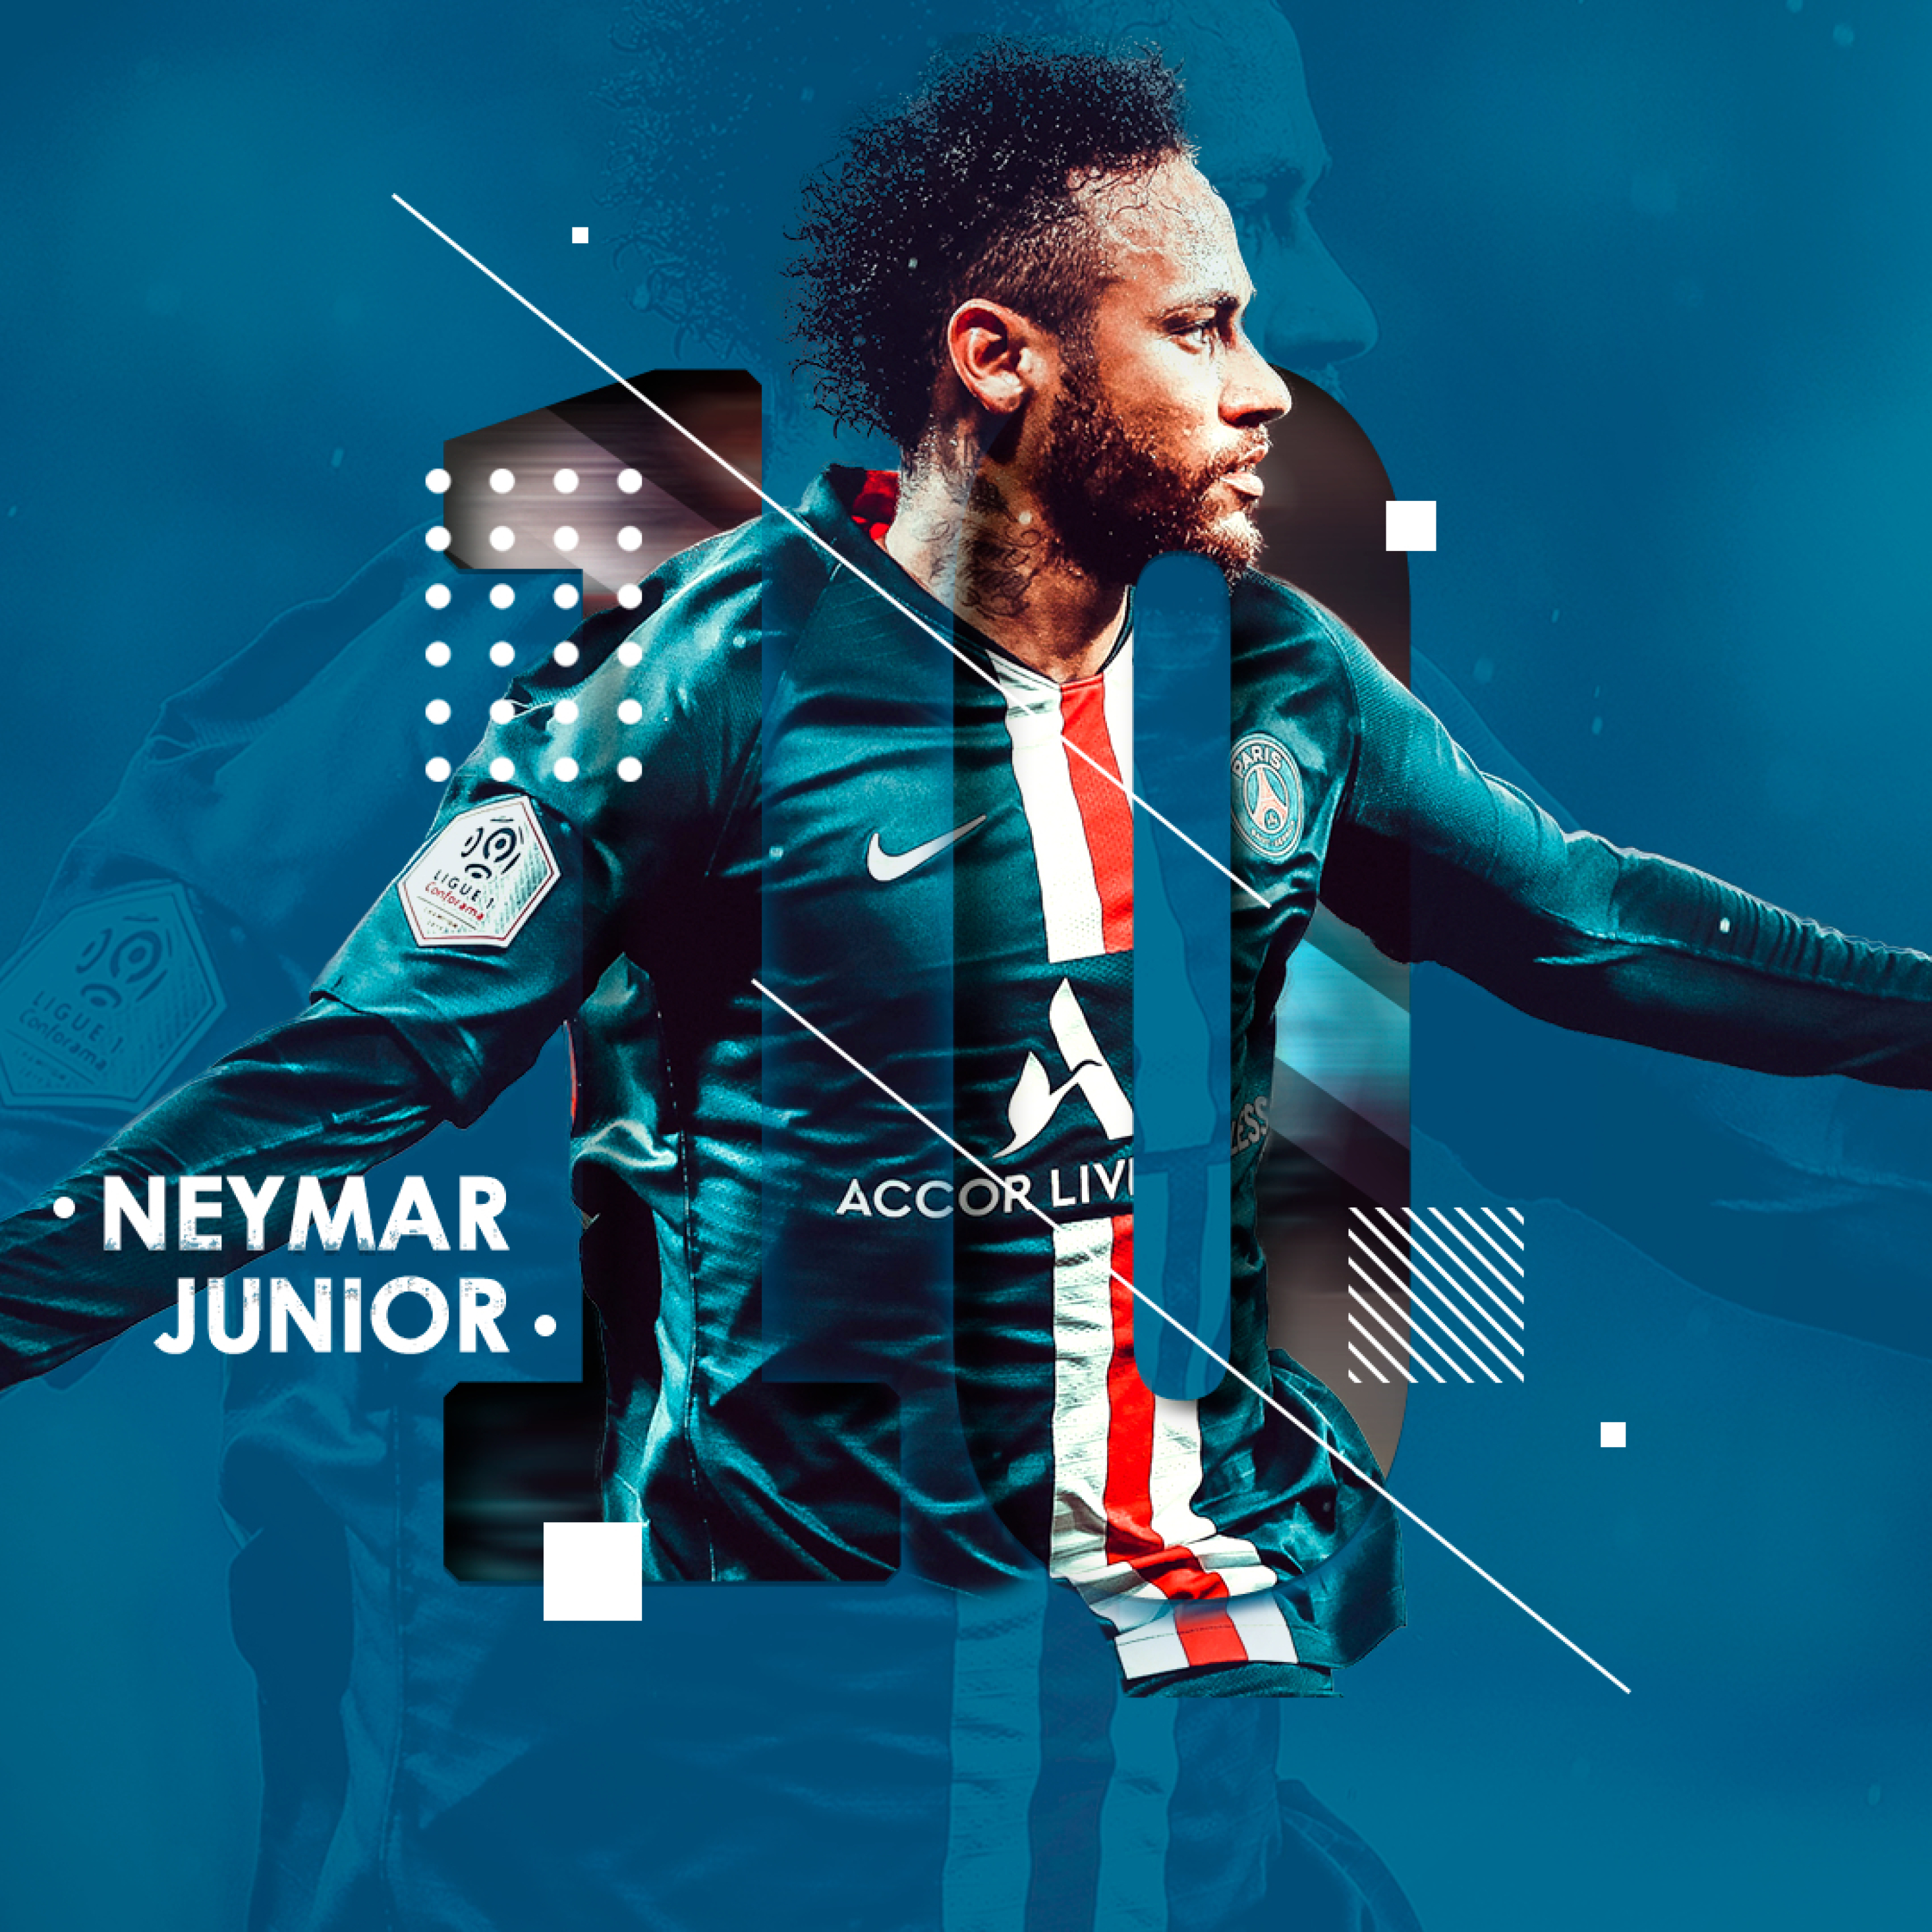 2932x2932 Neymar HD Art 2021 Ipad Pro Retina Display Wallpaper, HD Sports  4K Wallpapers, Images, Photos and Background - Wallpapers Den